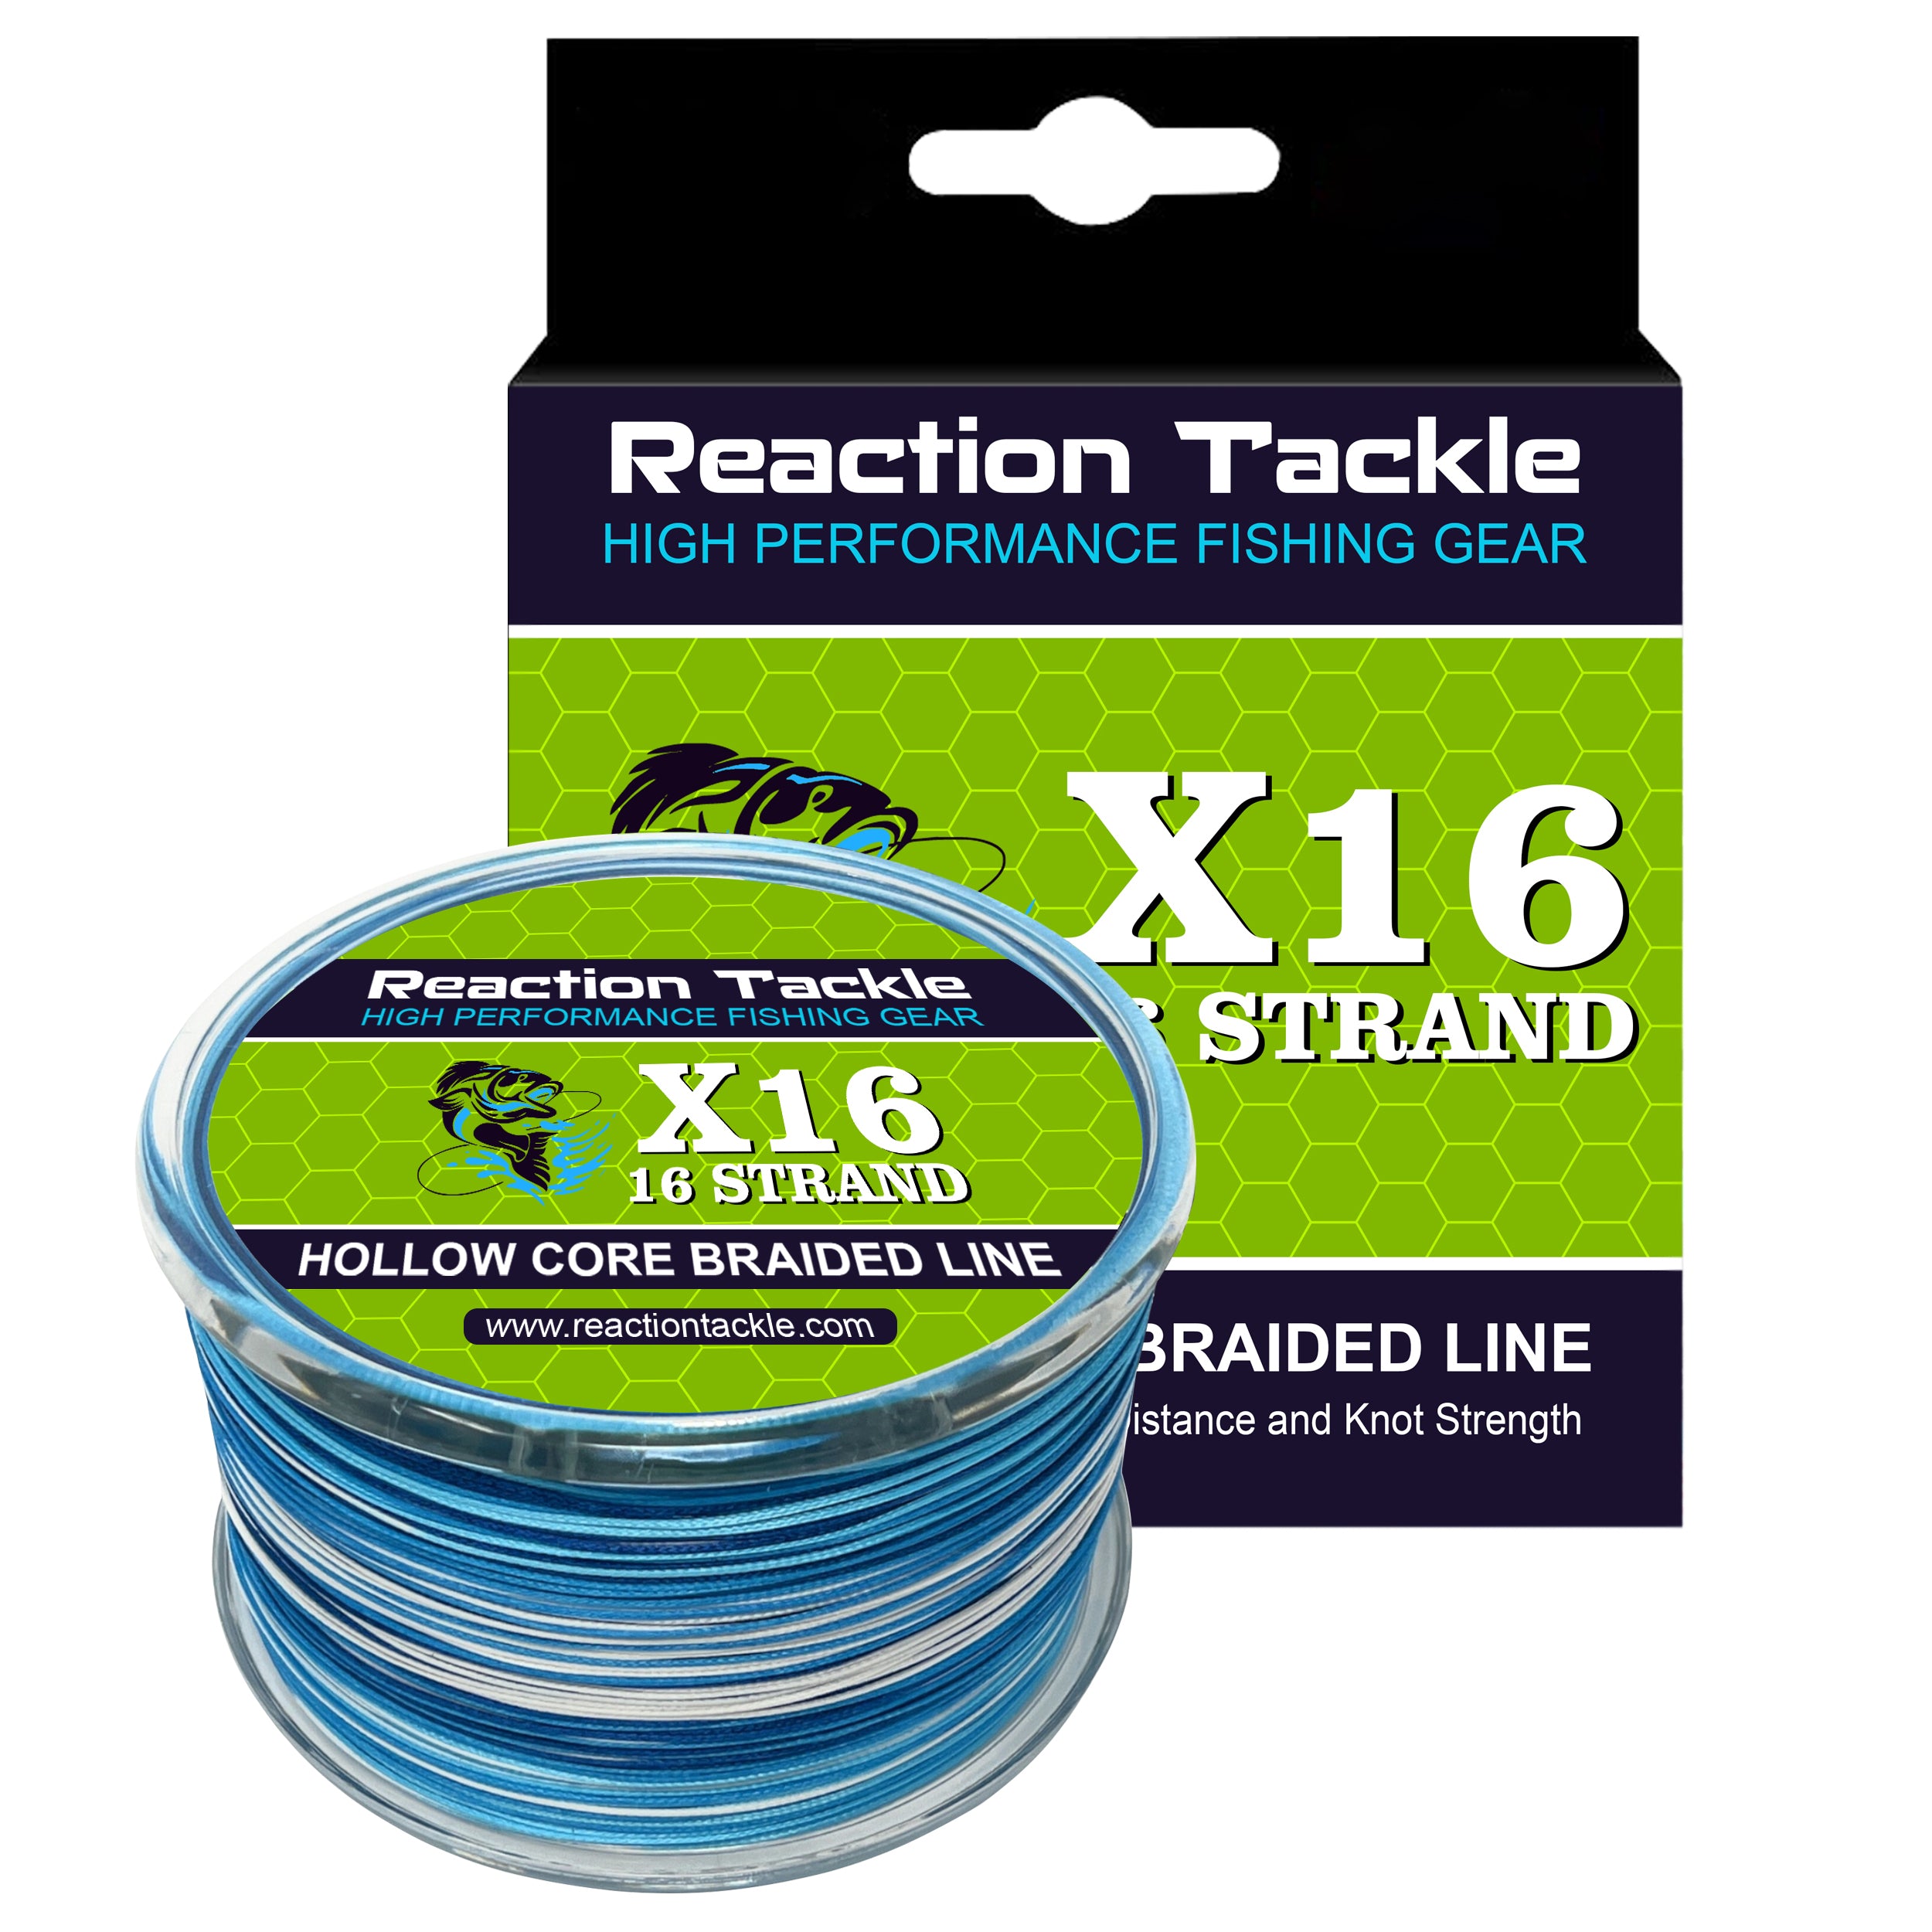 Reaction Tackle Braided Fishing Line / Braid - Aqua Camo 4 and 8 Strands